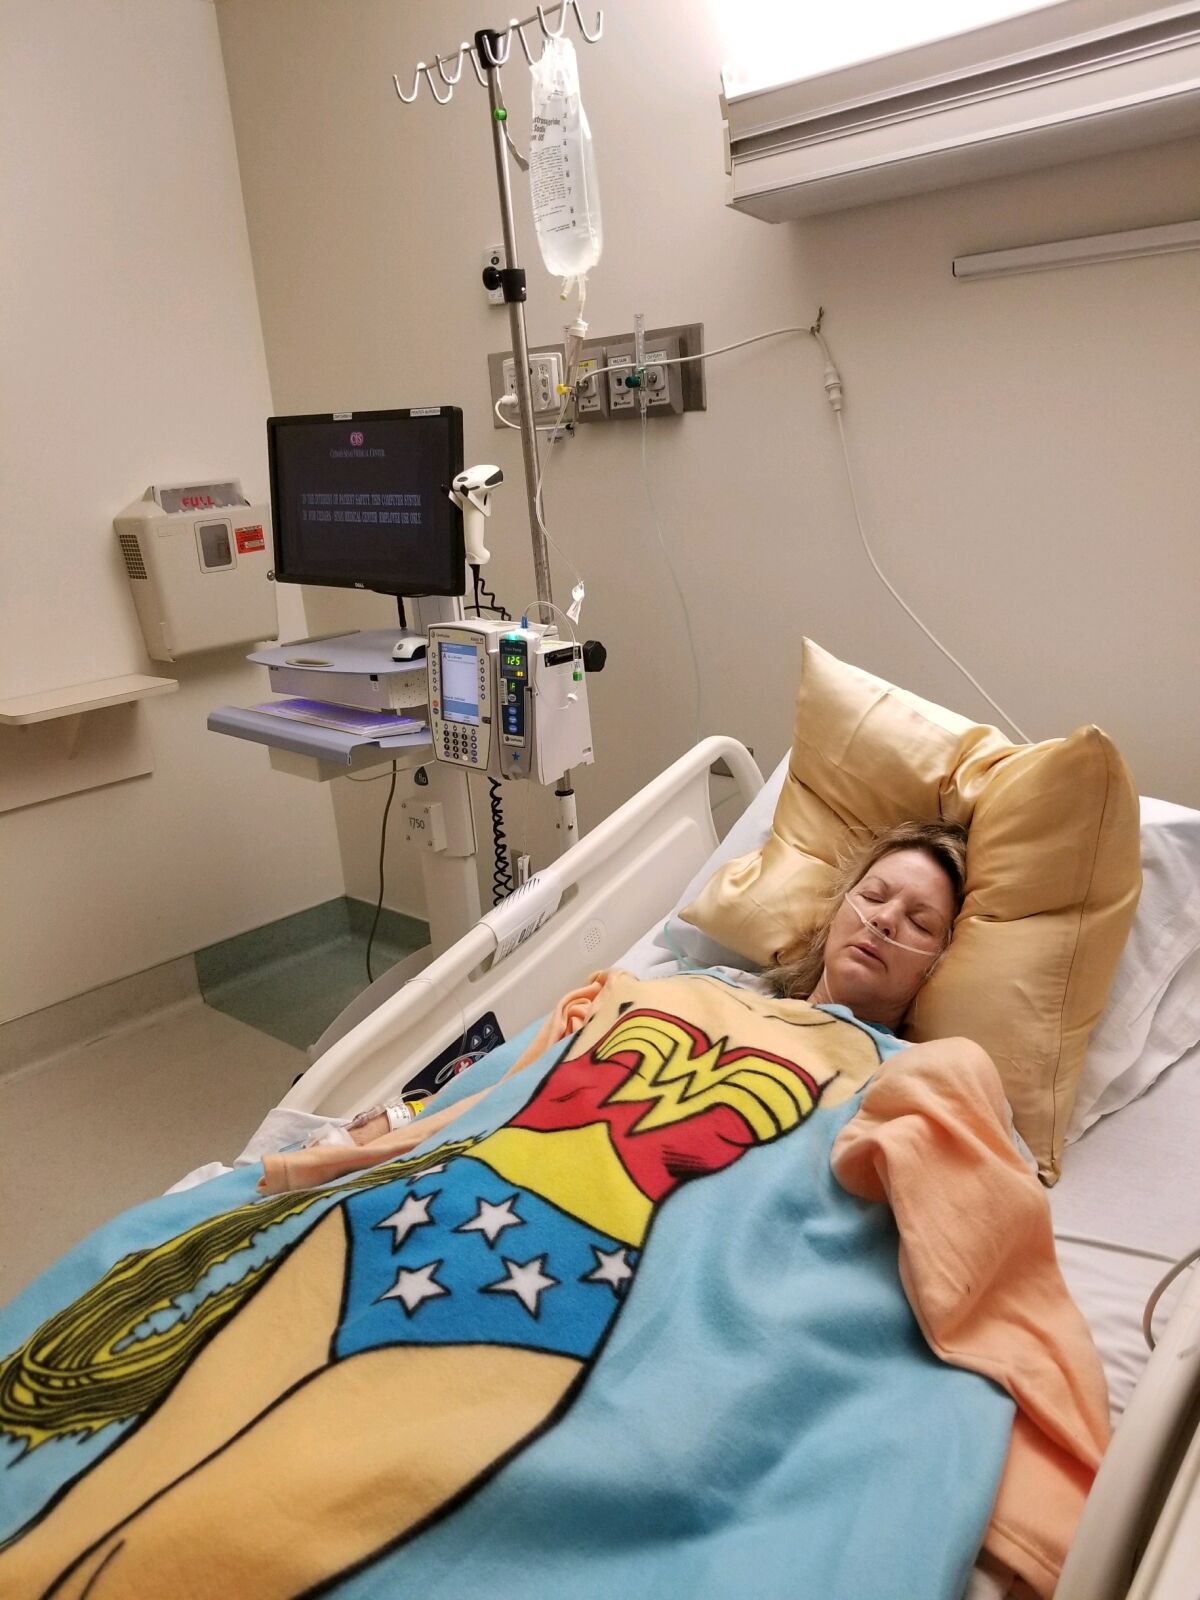 Heidi Miller in a hospital bed in Cedars-Sinai awaiting transplant surgery.